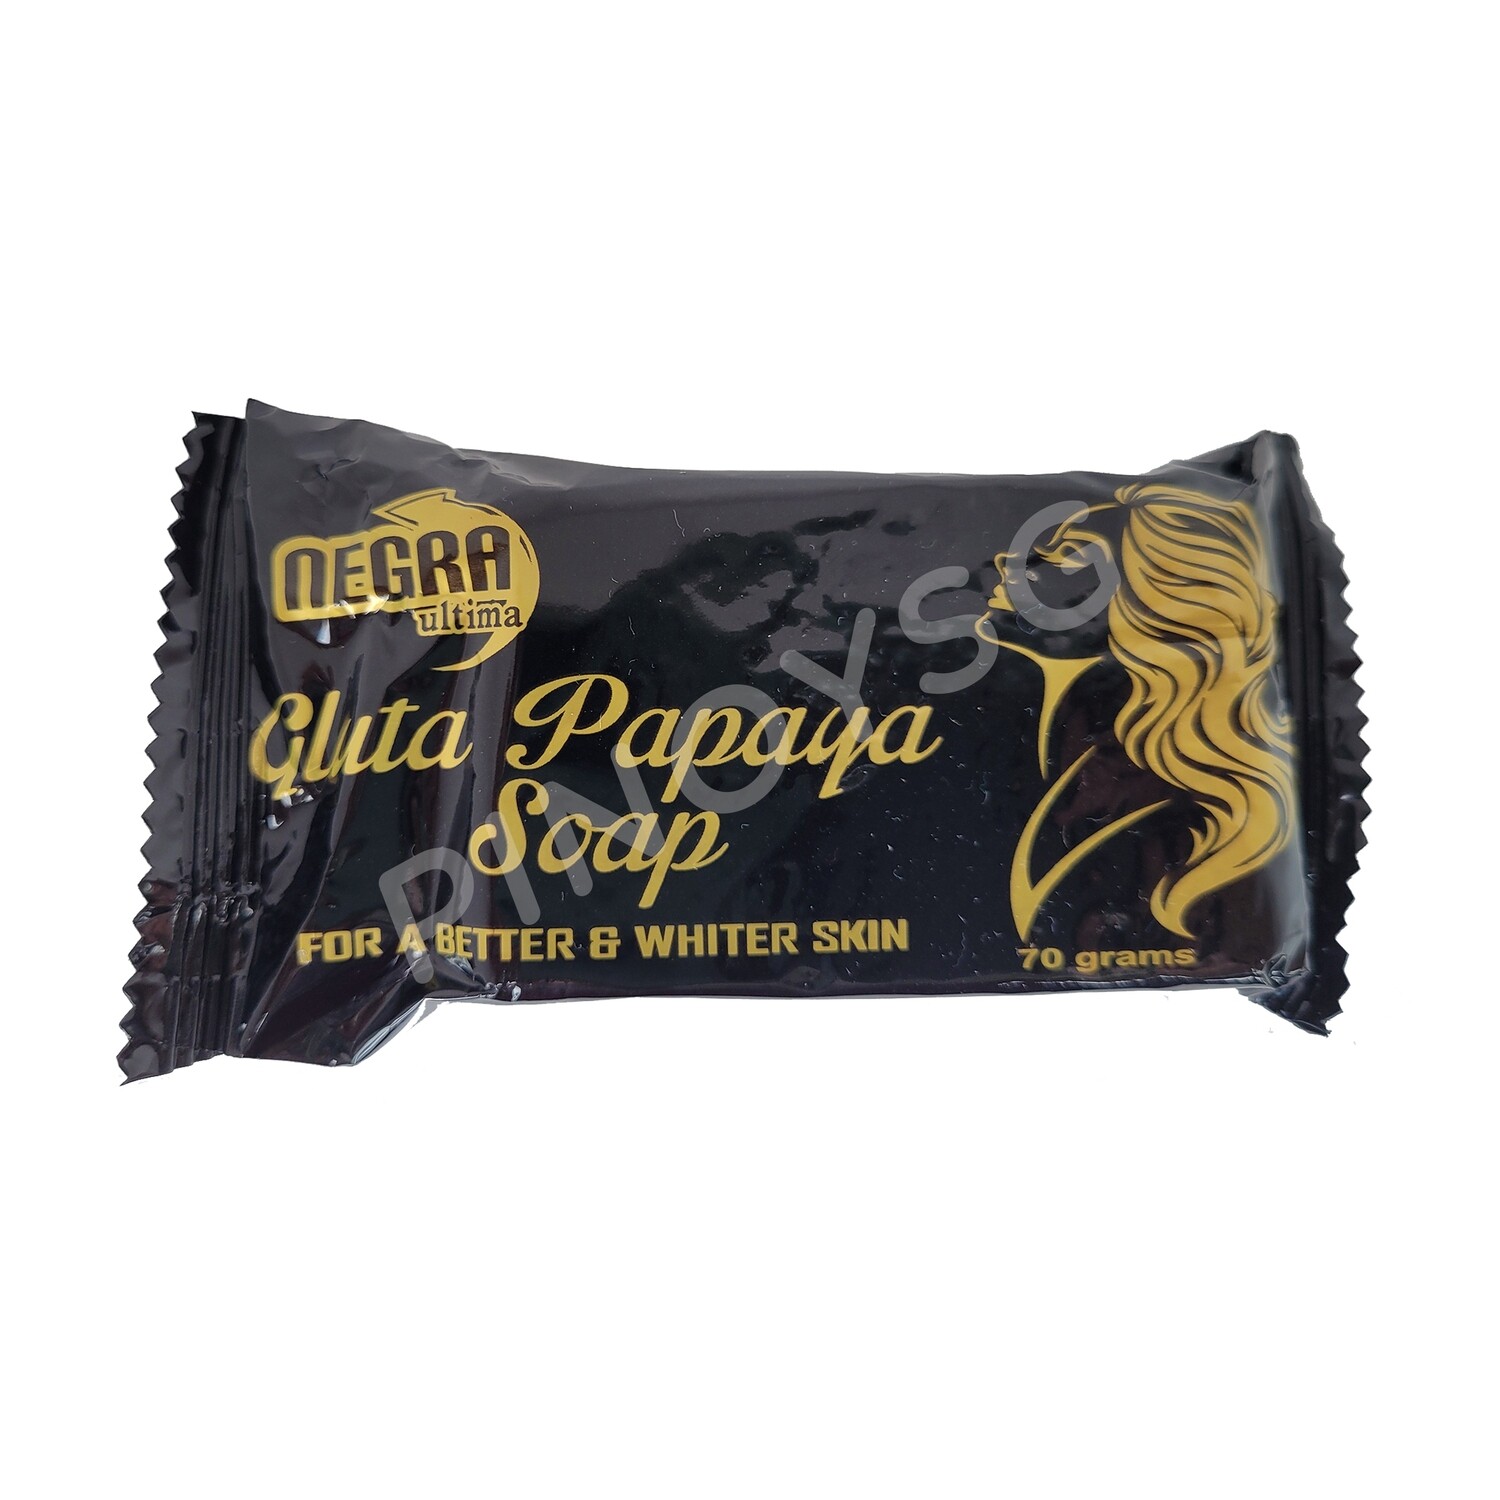 Negra Ultima Gluta Papaya Soap 70g